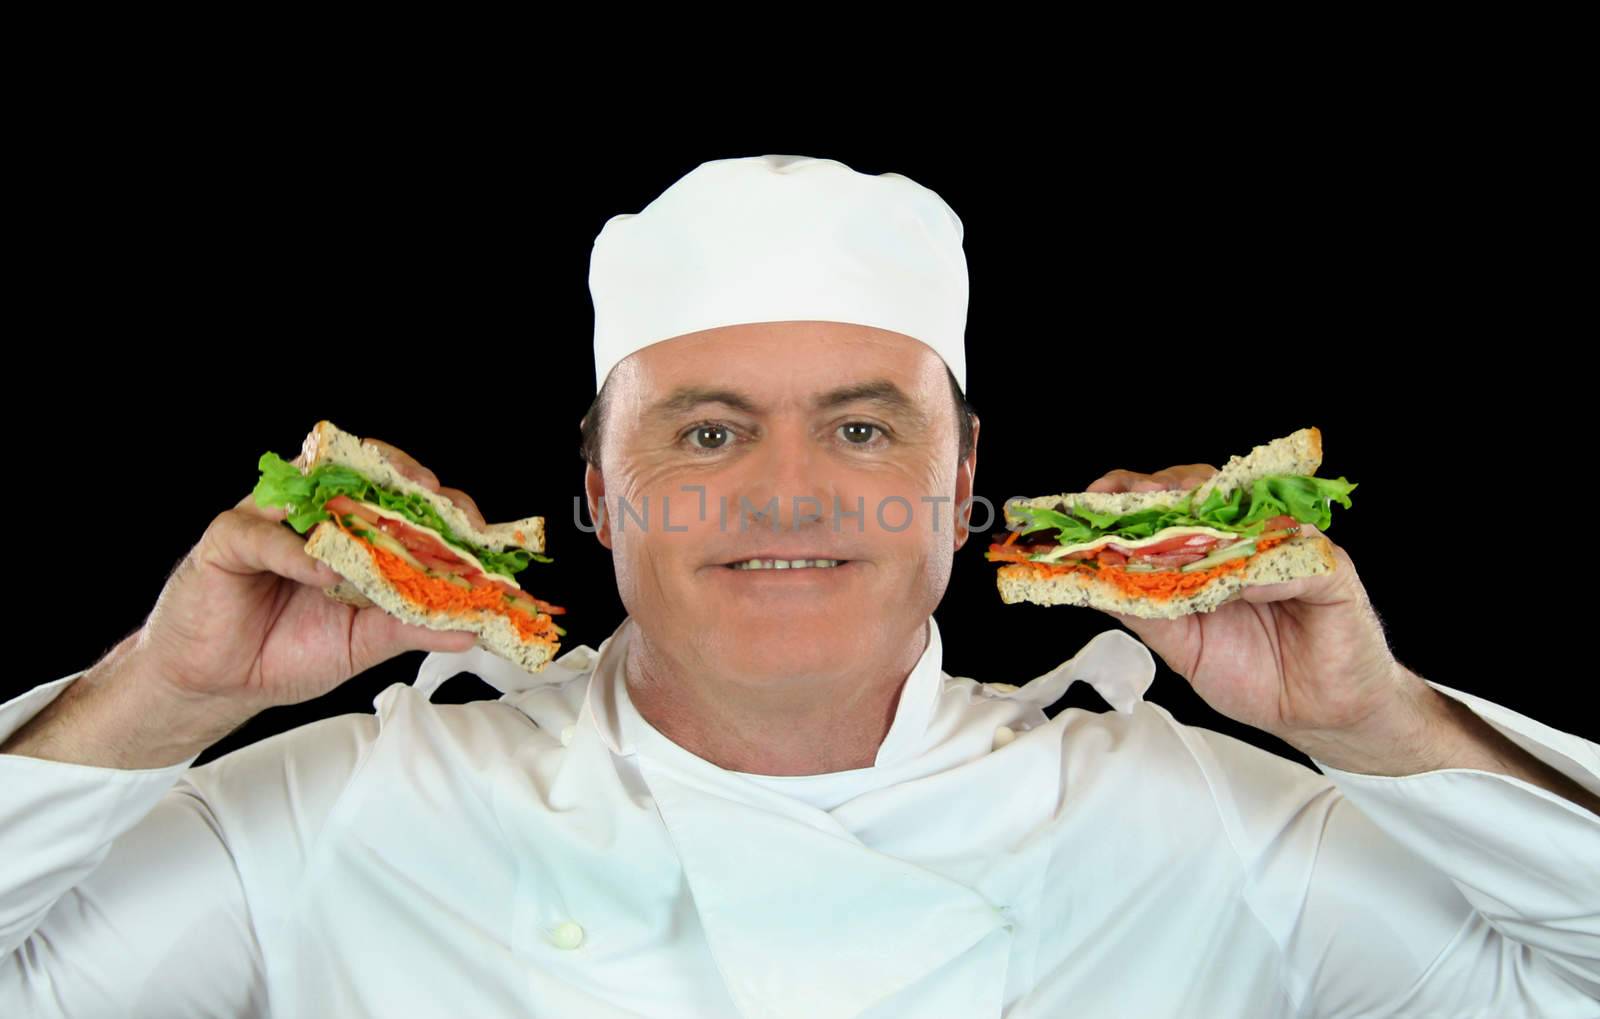 Sandwich Holding Chef by jabiru